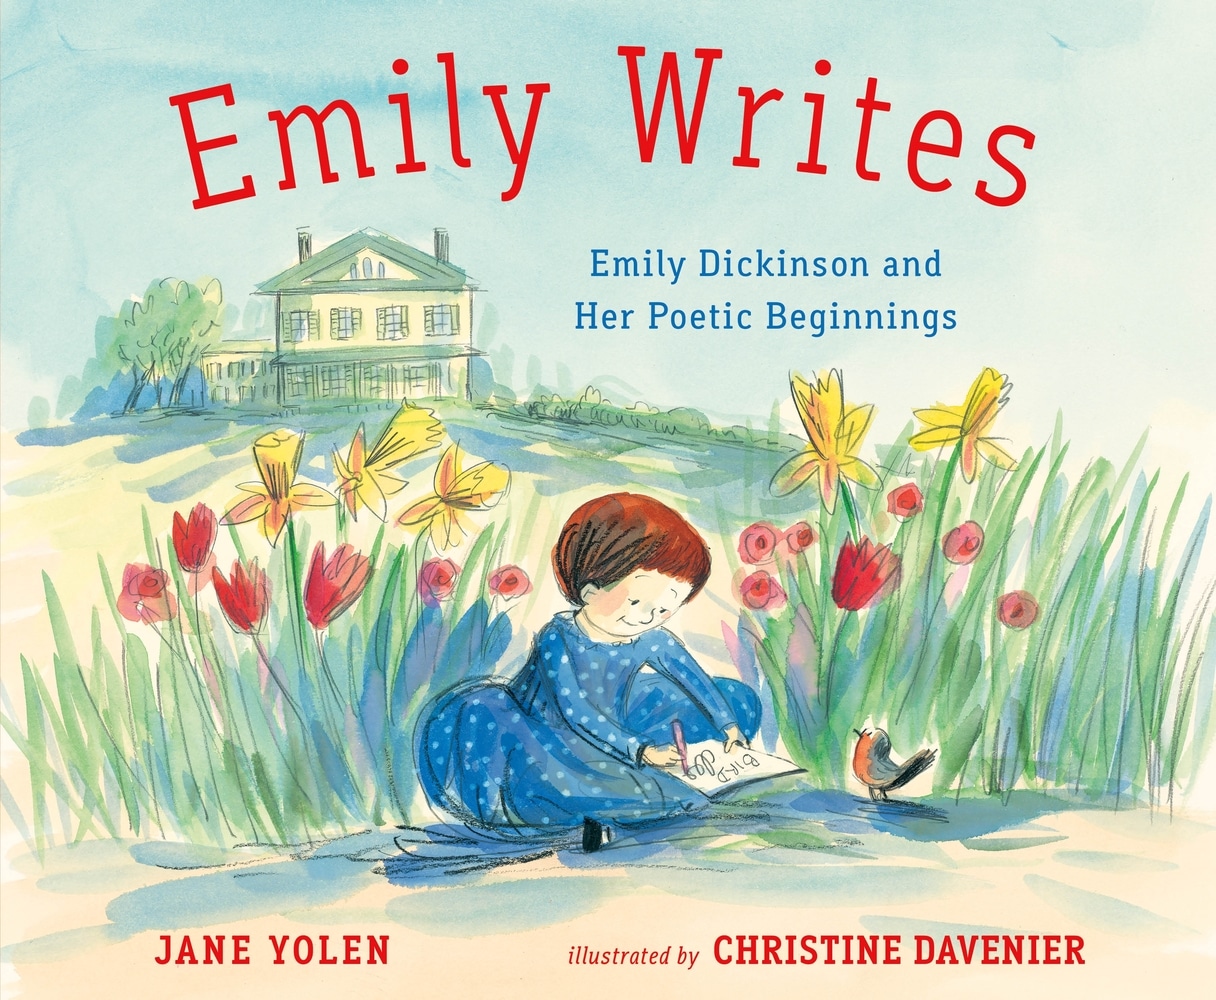 Book “Emily Writes” by Jane Yolen — February 4, 2020